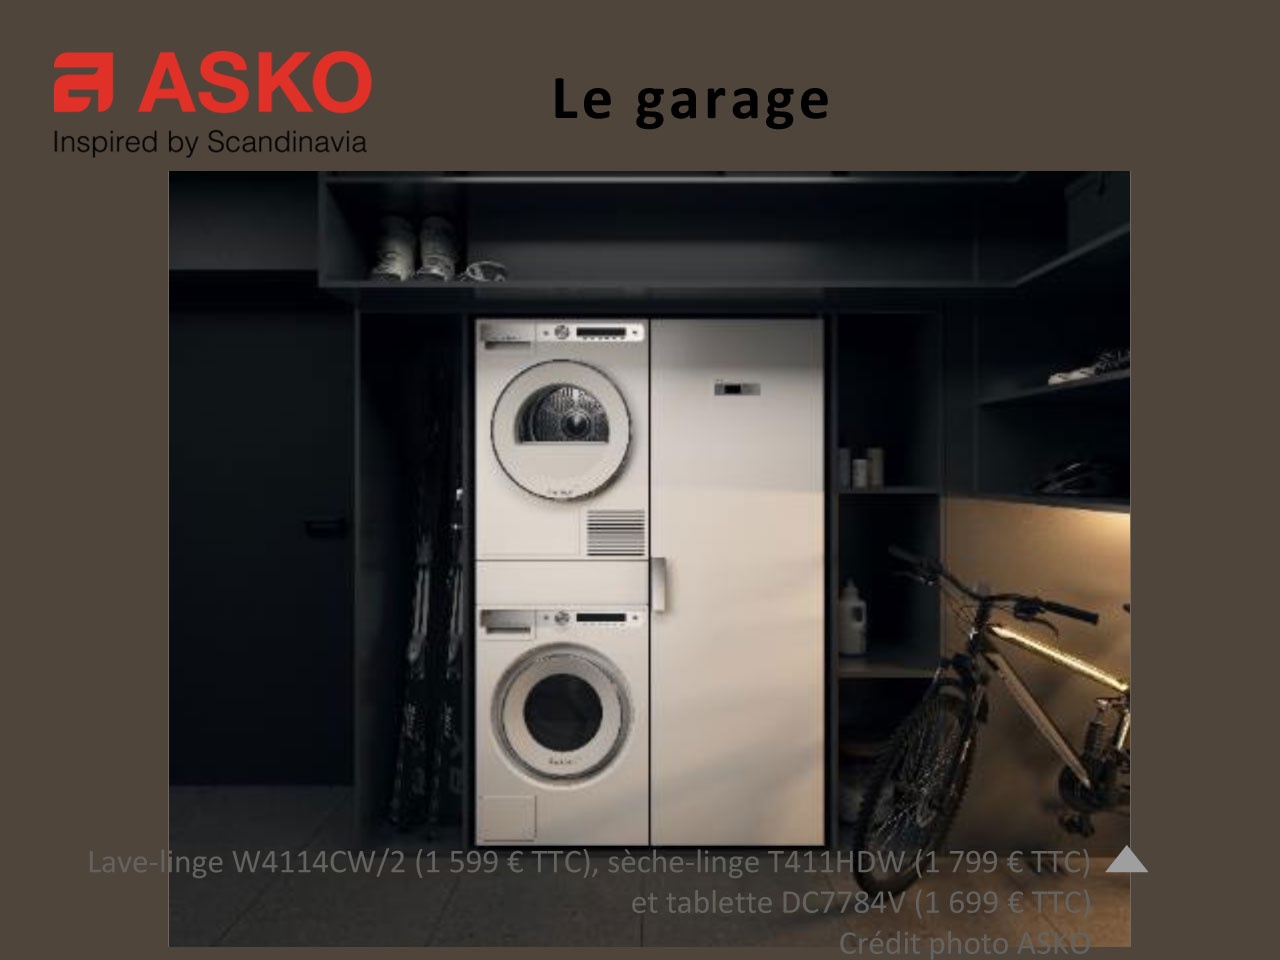 Garage, dressing, buanderie : ASKO livre son carnet d'inspirations